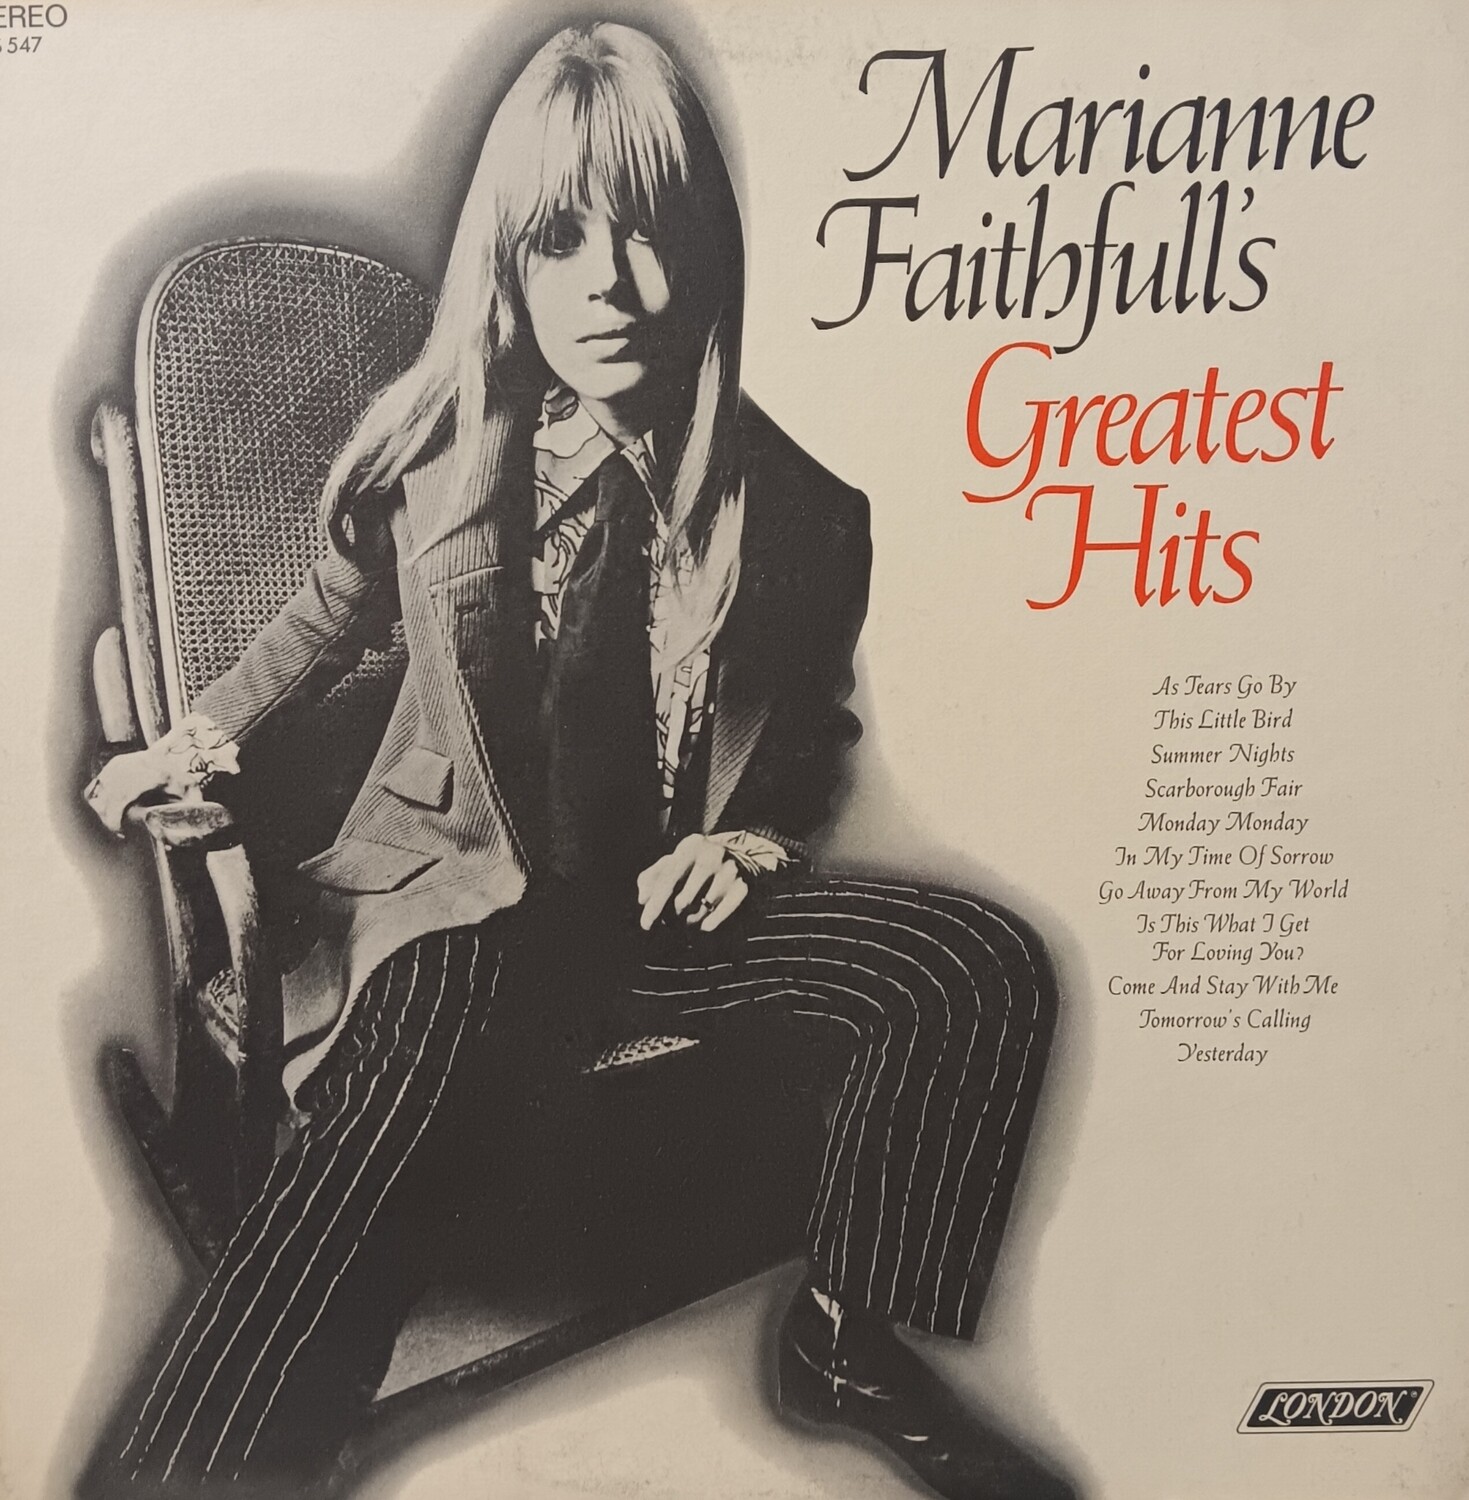 MARIANNE FAITHFULL - Marianne Faithfull's Greatest Hits